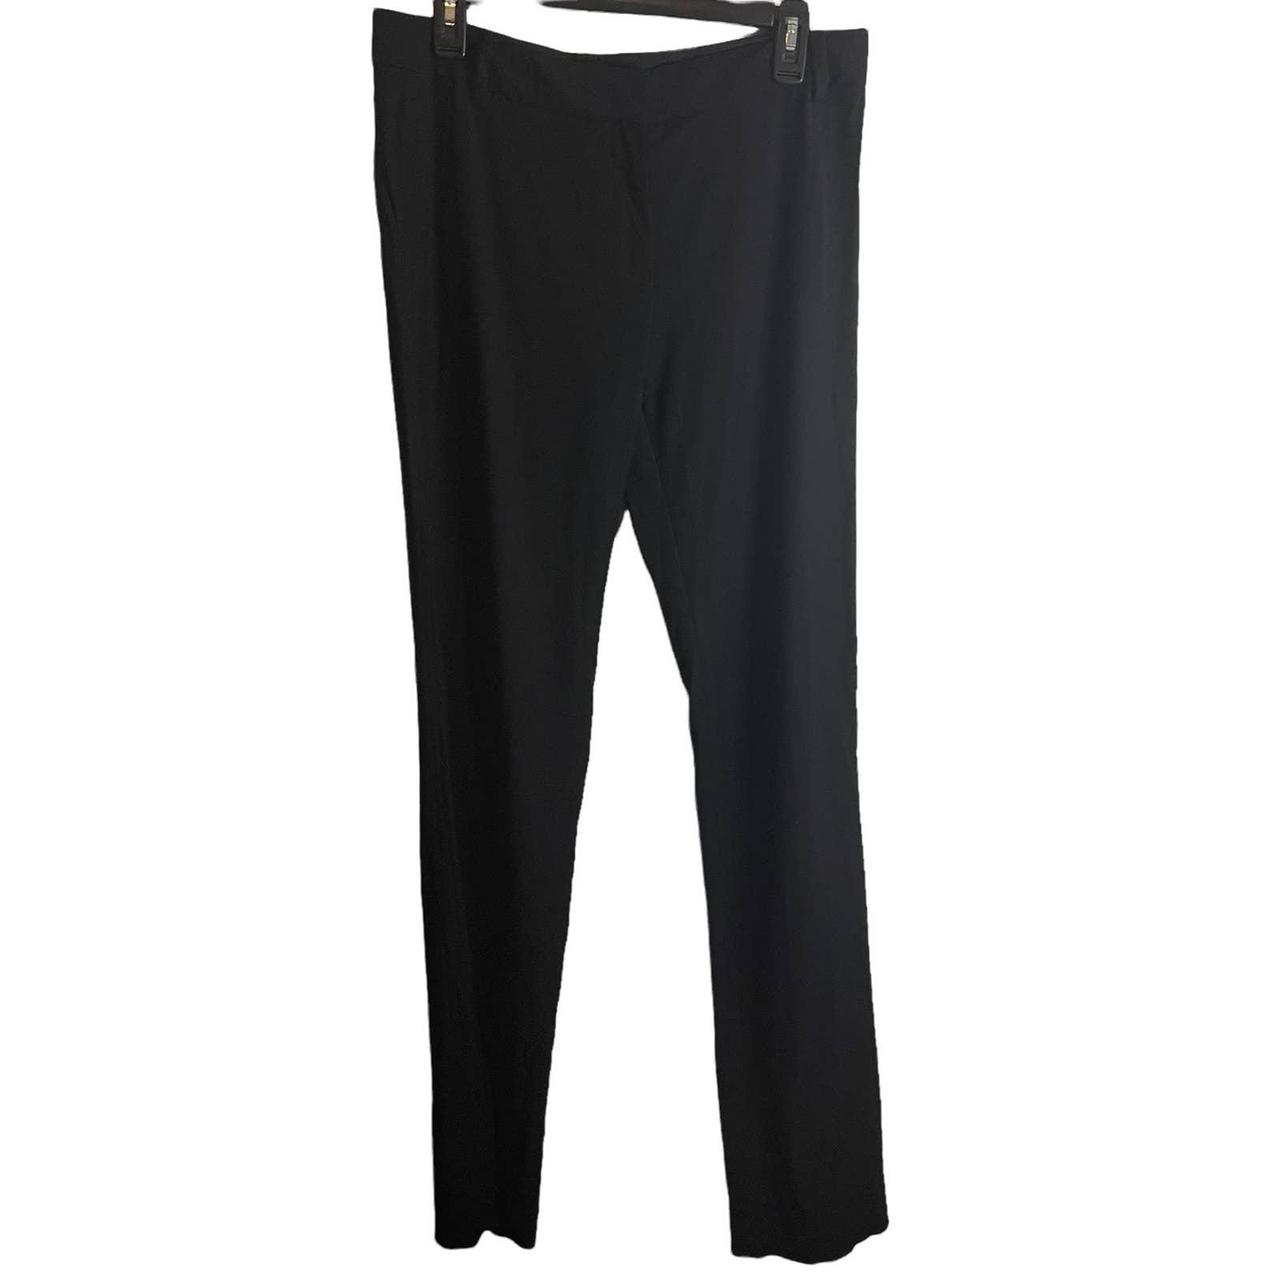 K.A. 7 Wool Black Dress Business Pants Career Size... - Depop